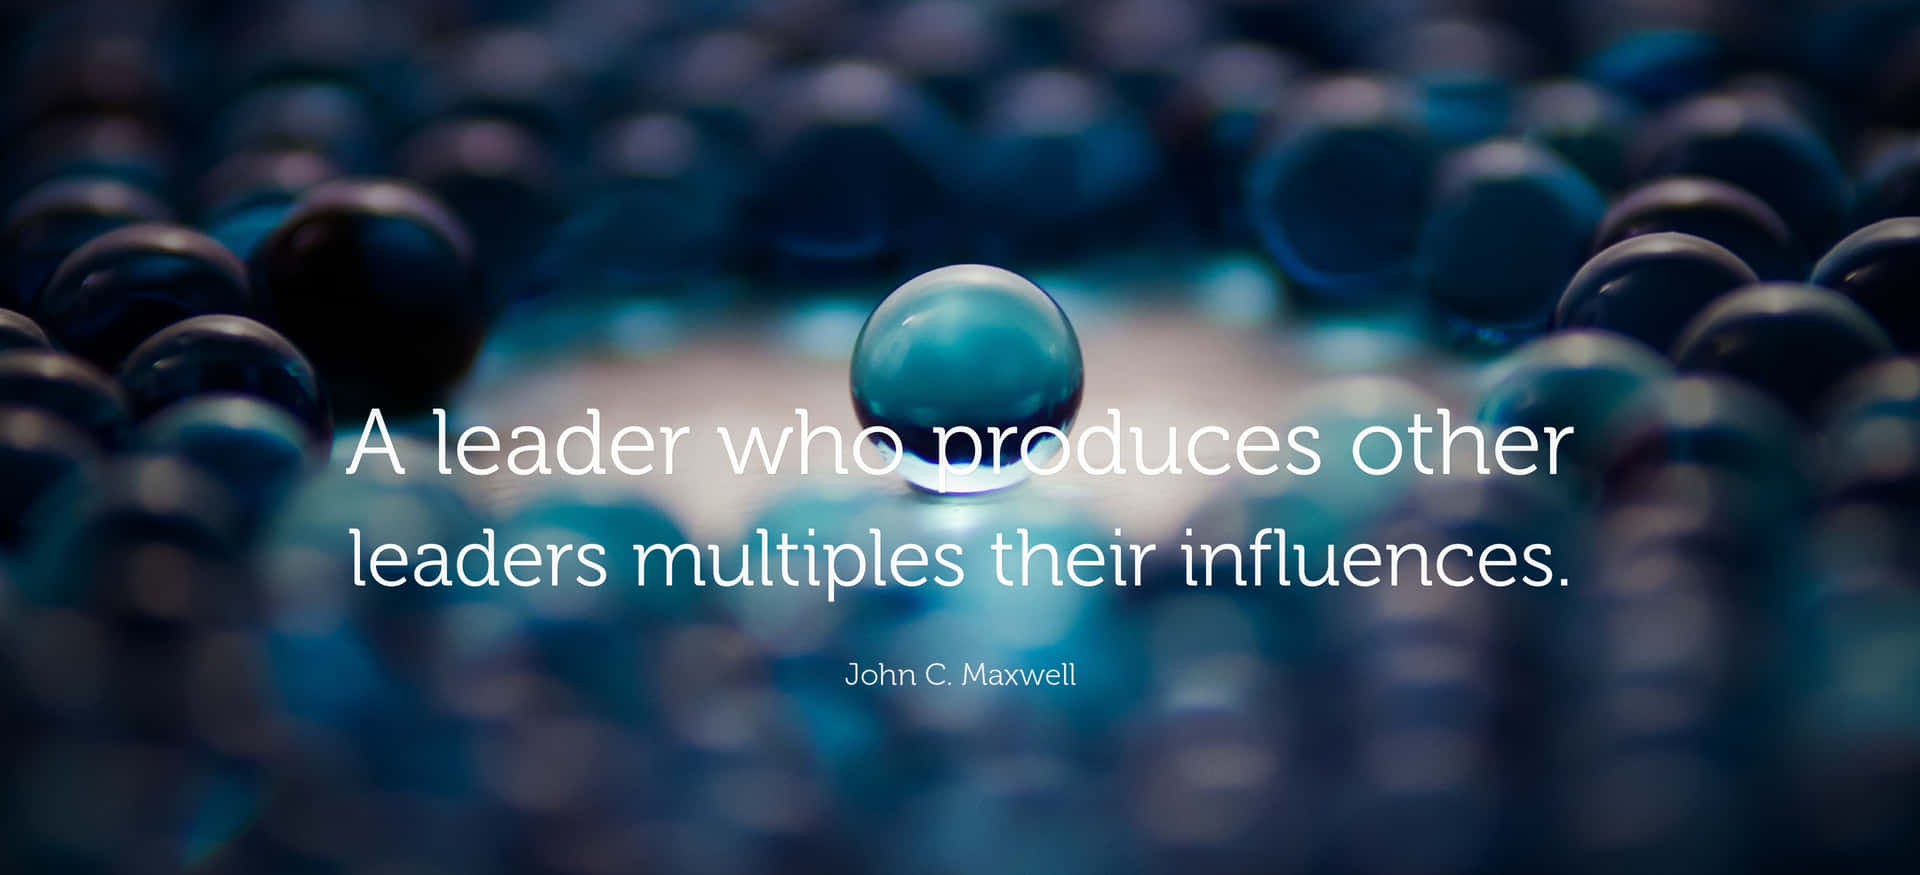 Leadership Influence Quote John C Maxwell Wallpaper